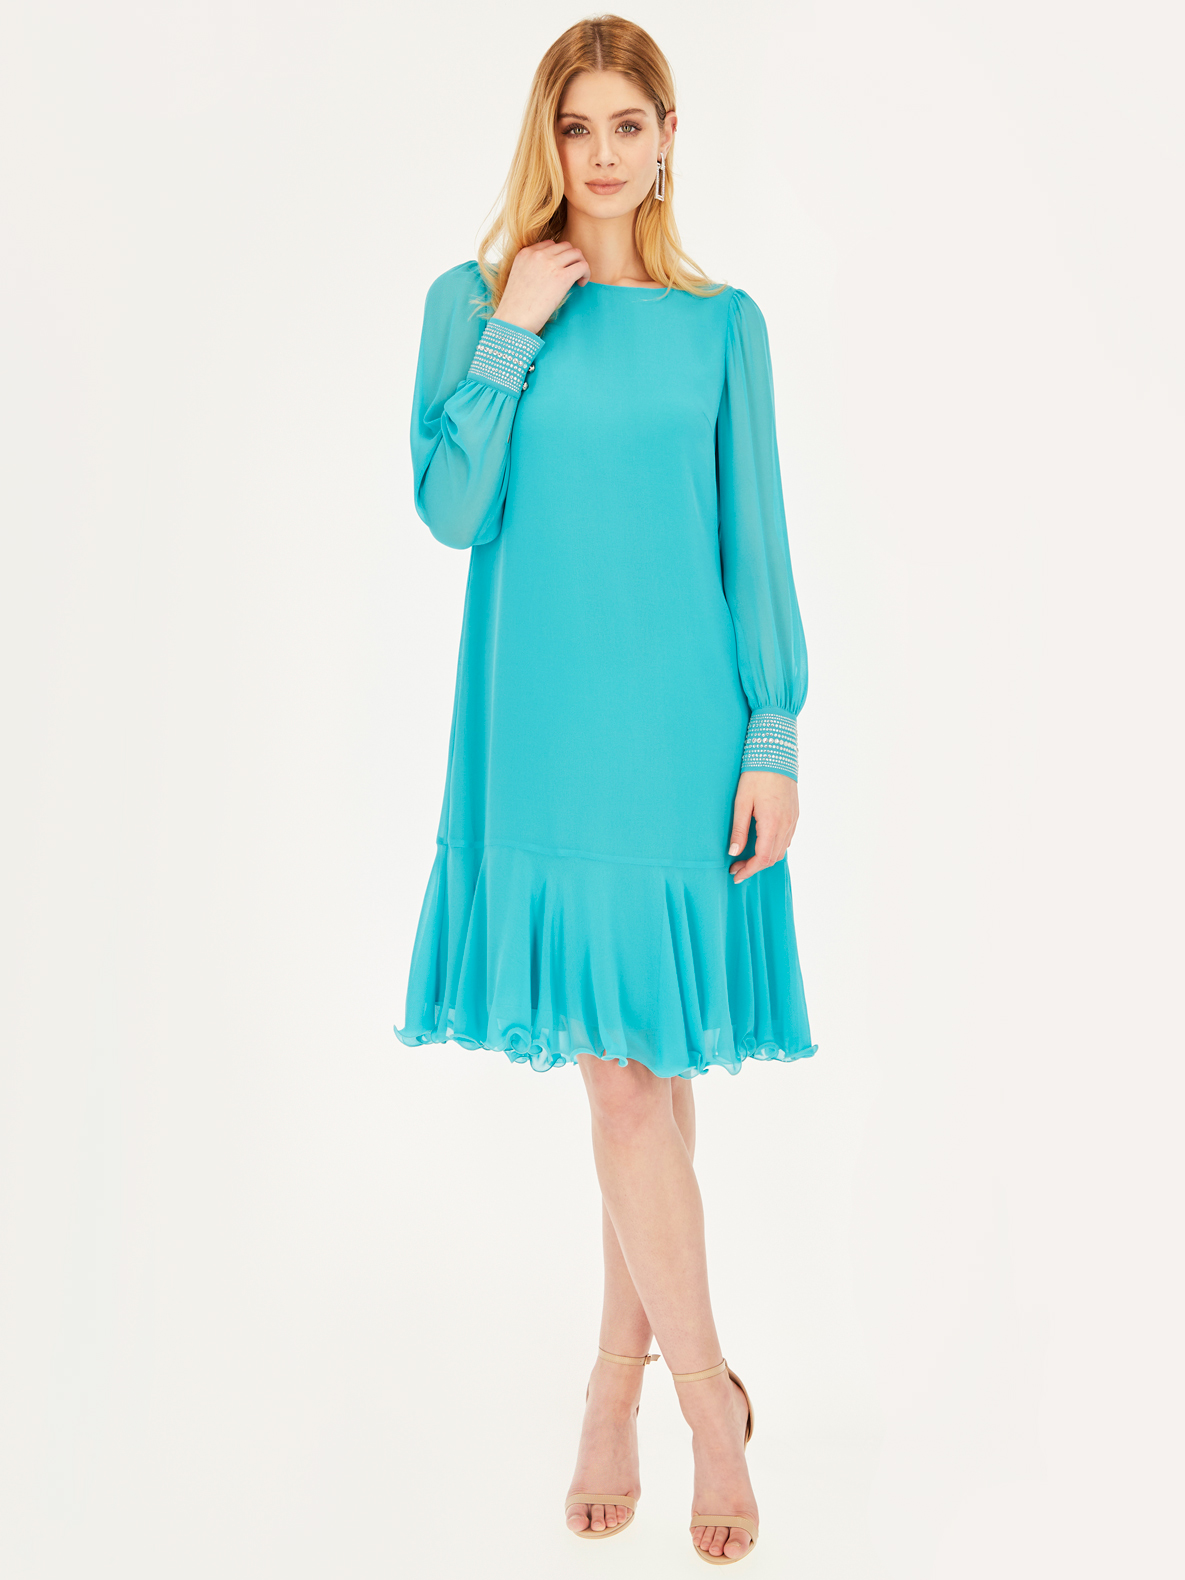 Dress Sante turquoise